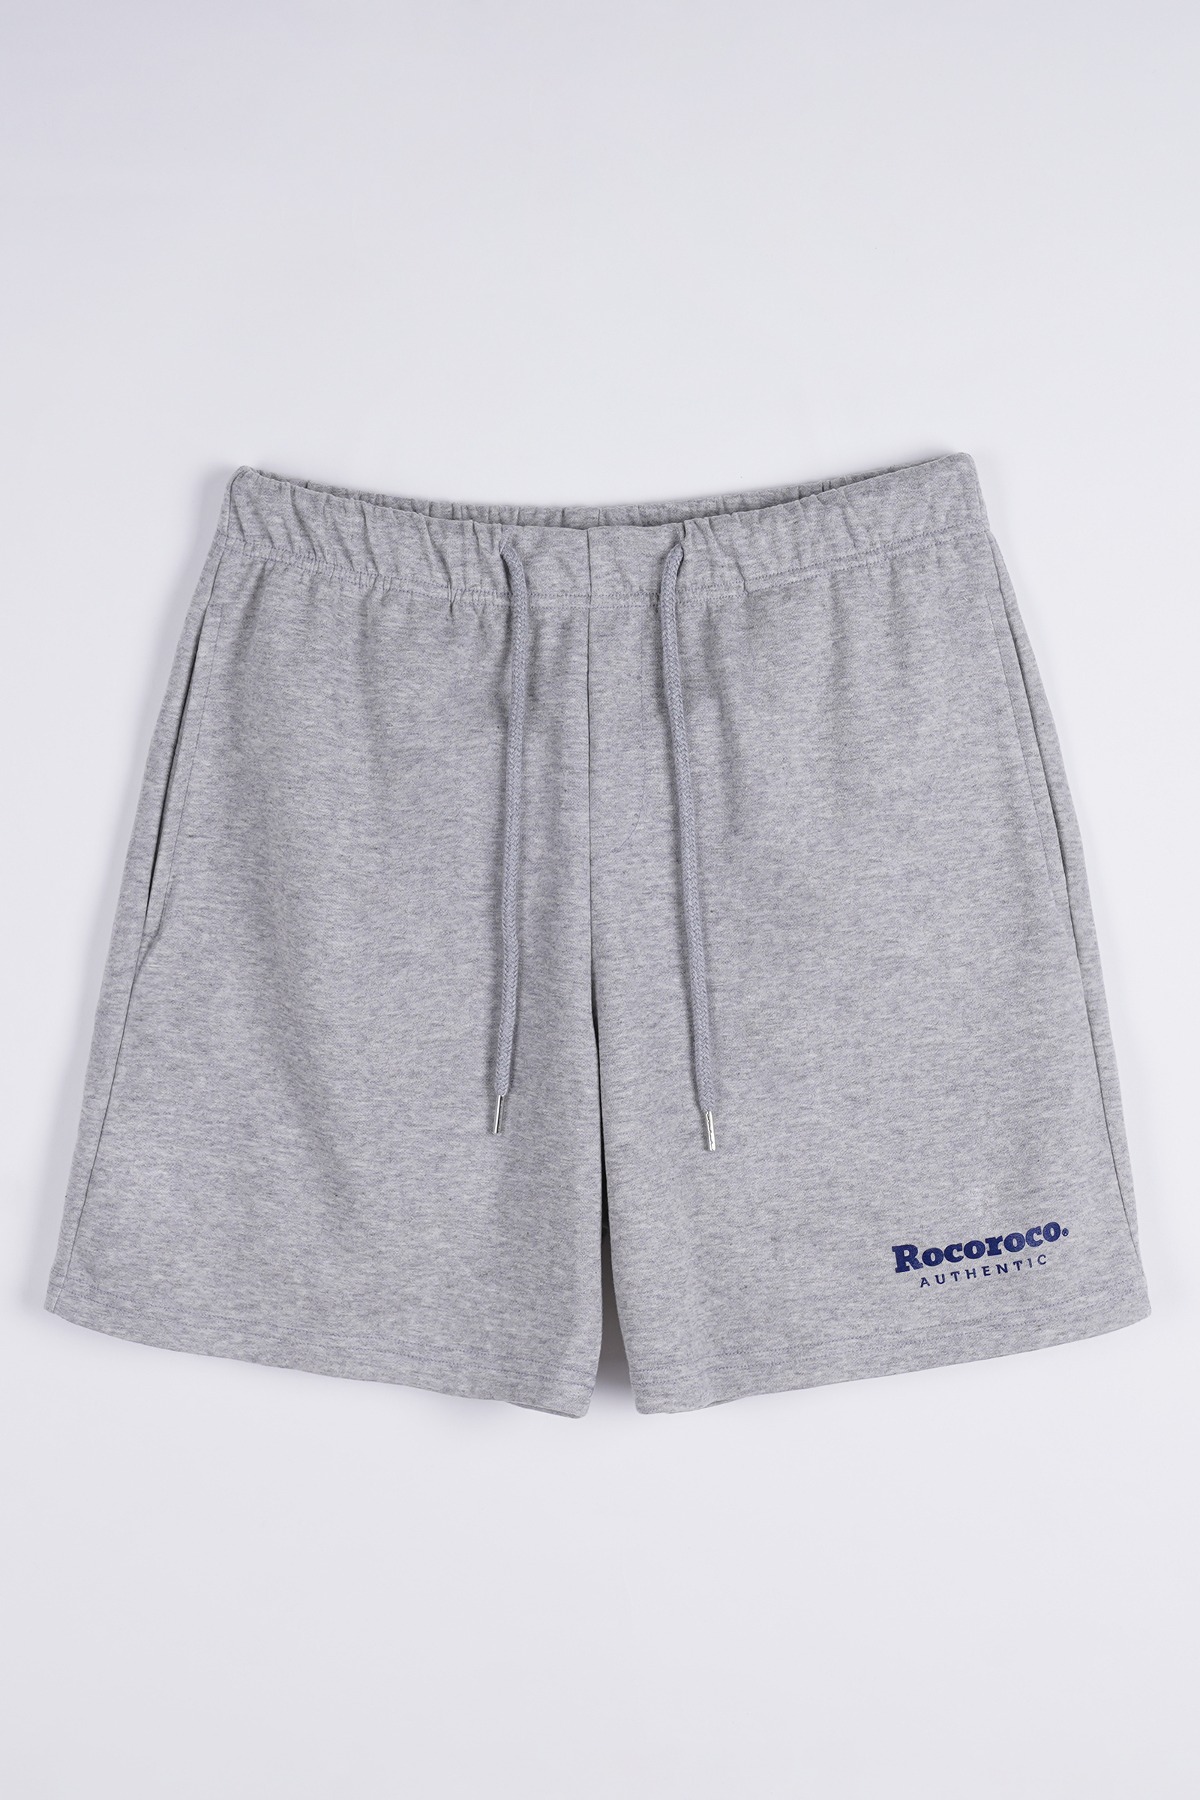 R Authentic Shorts gray melange